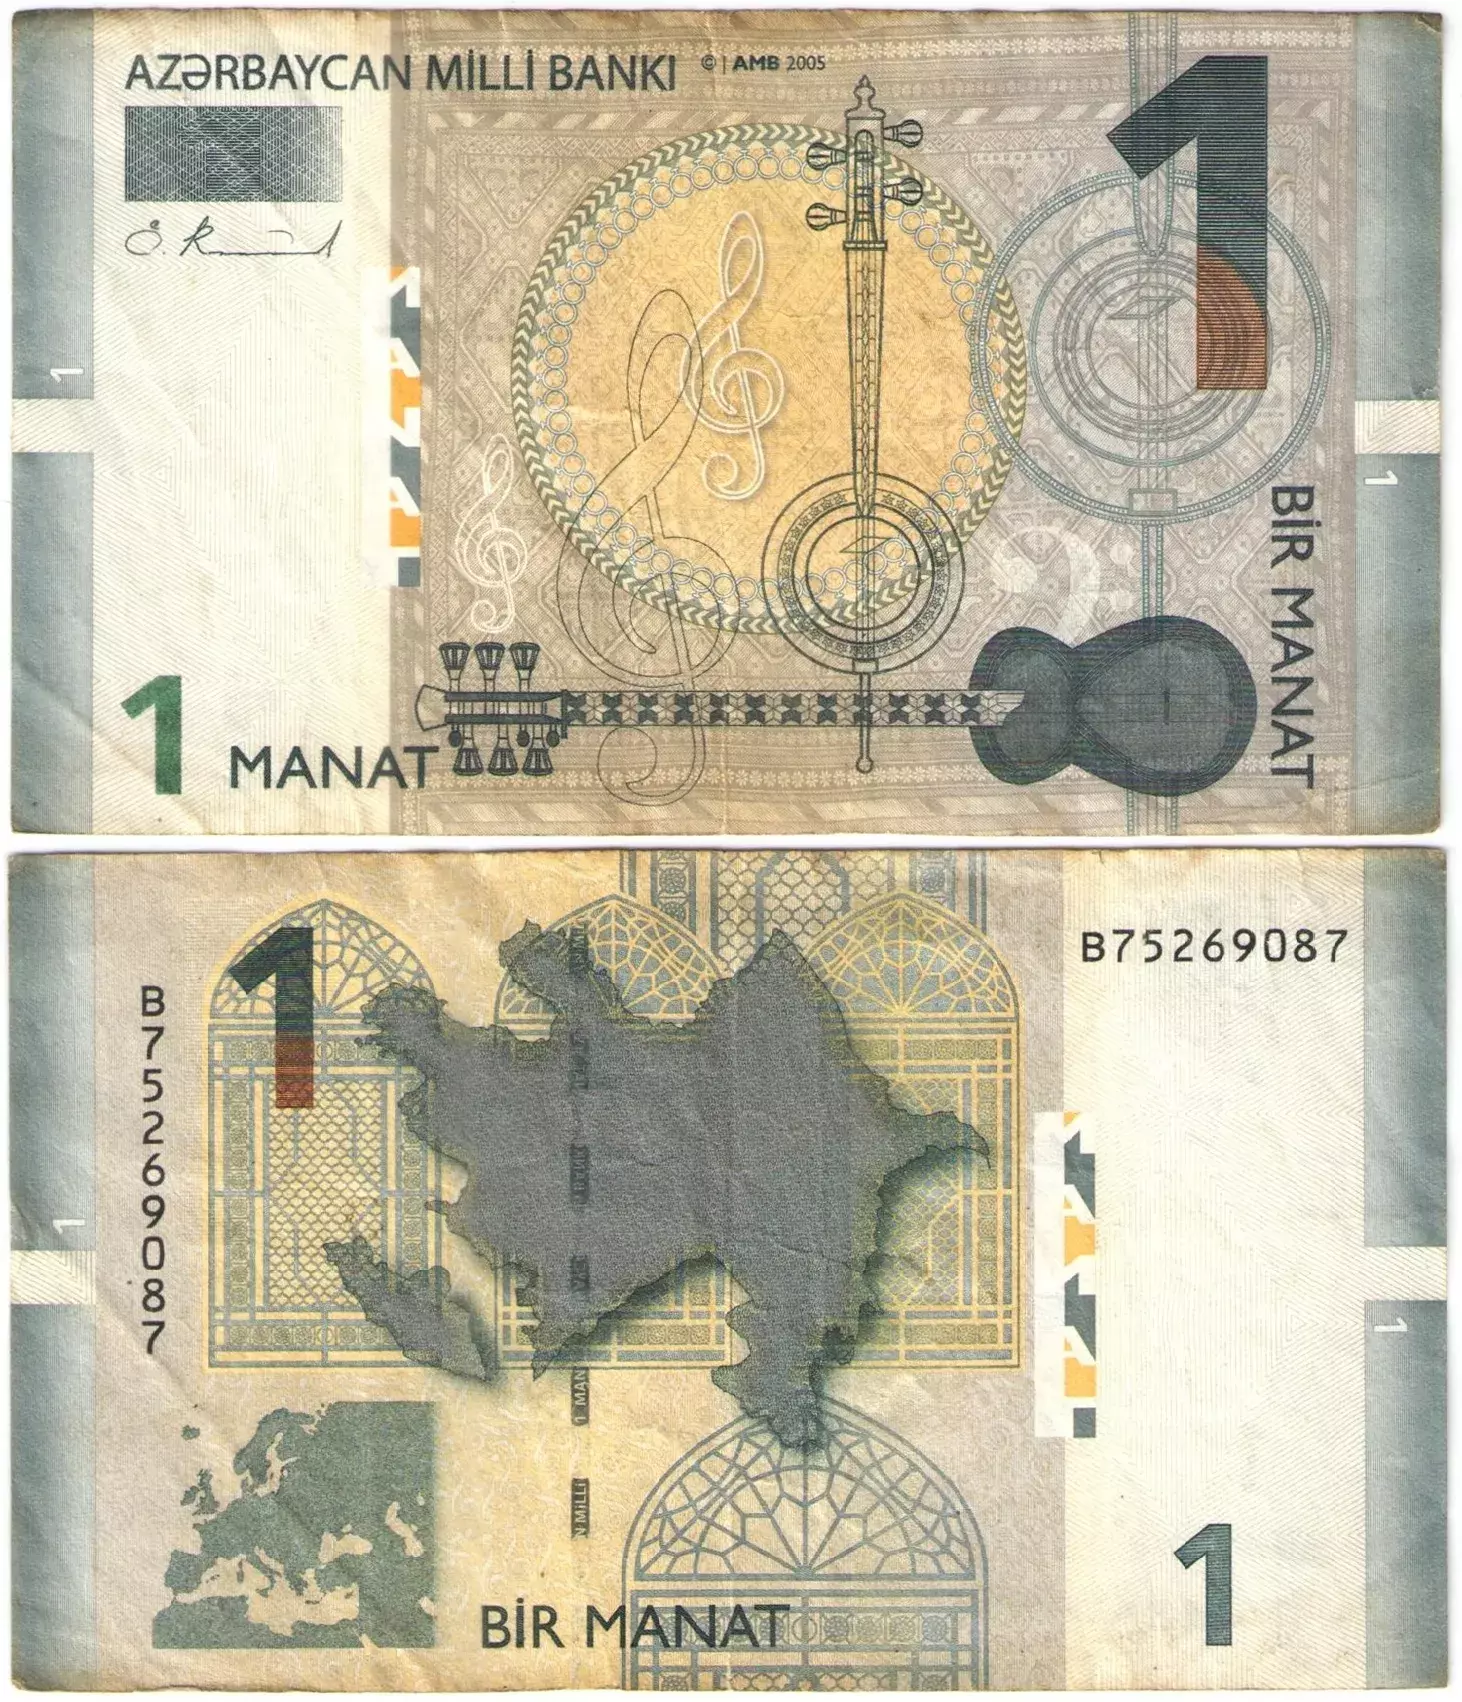 валюта азербайджана